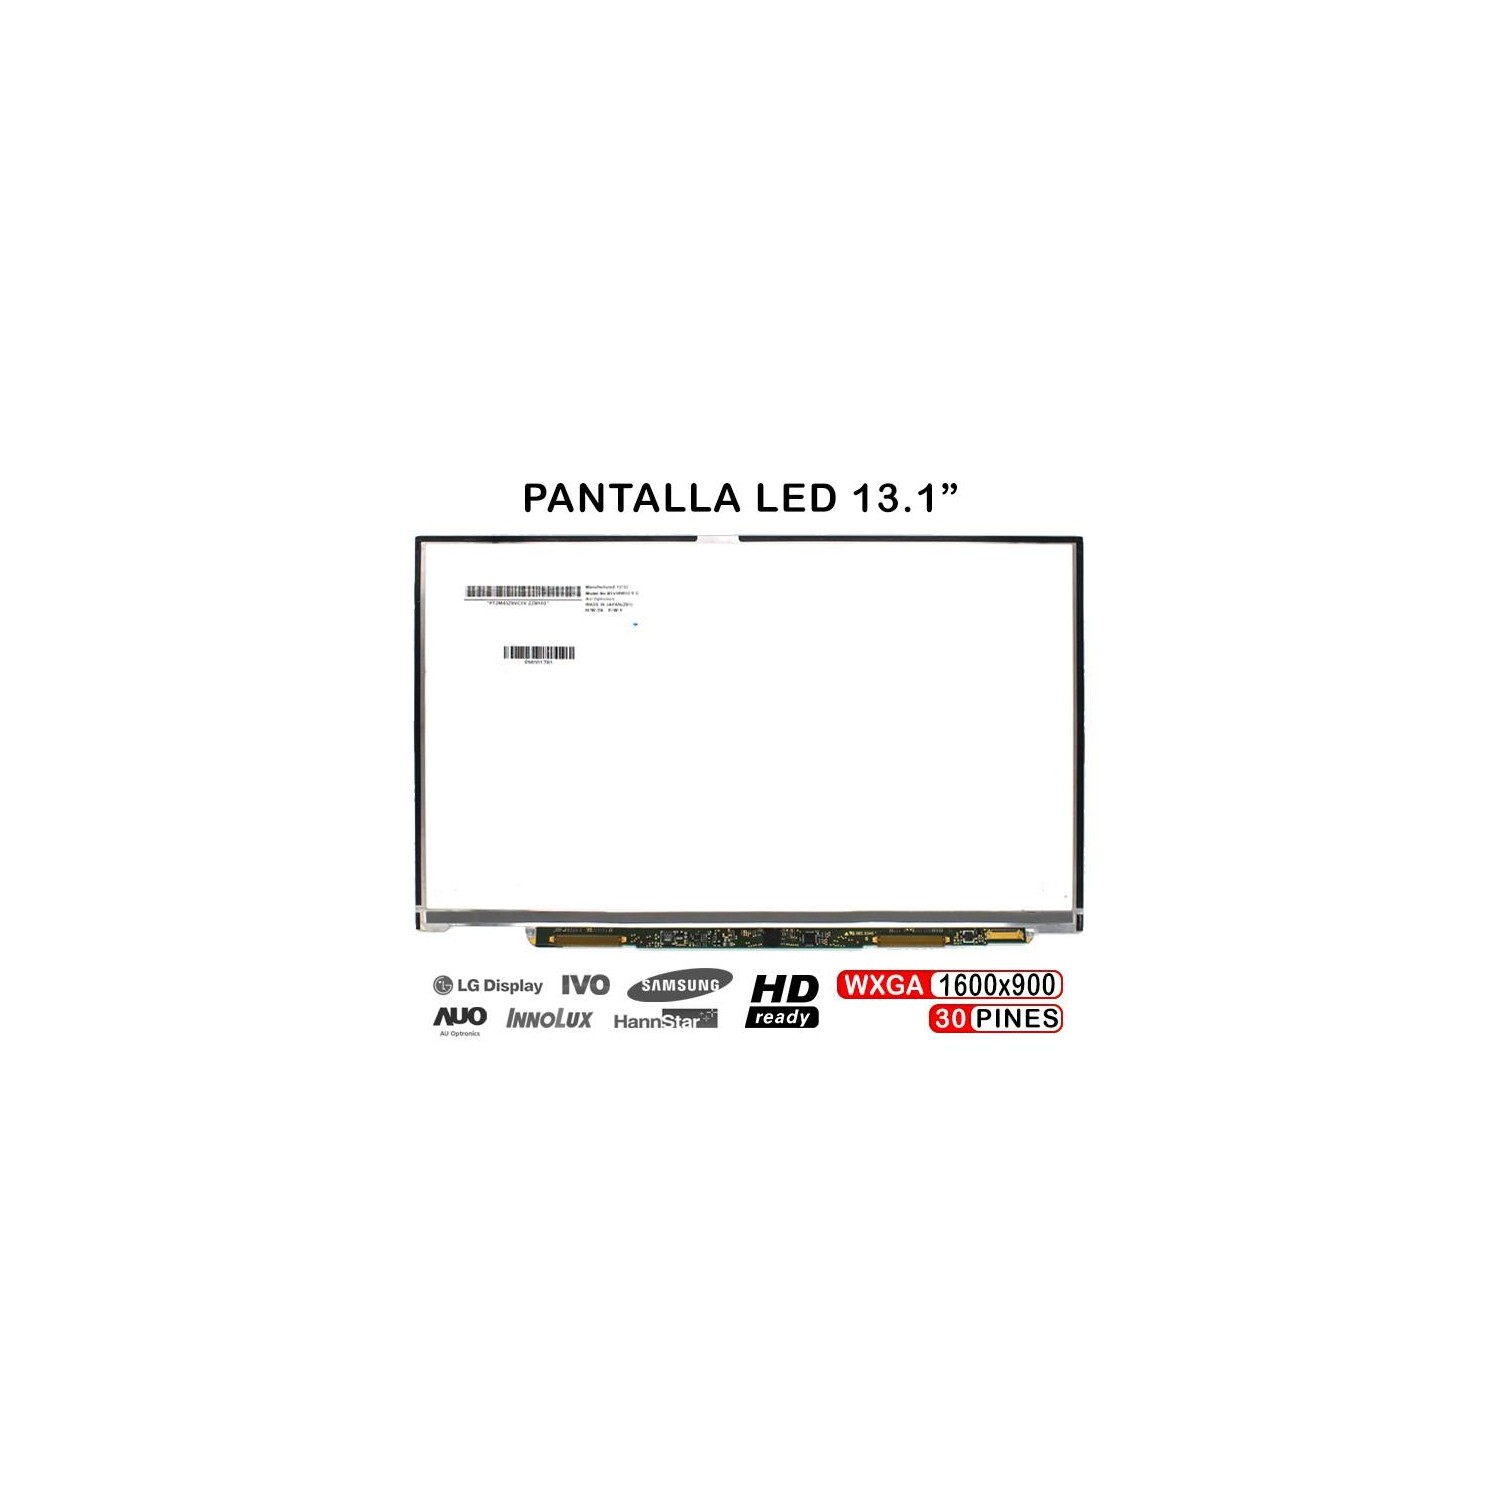 PANTALLA LED DE 13.1" PARA PORTÁTIL B131RW02 V.0